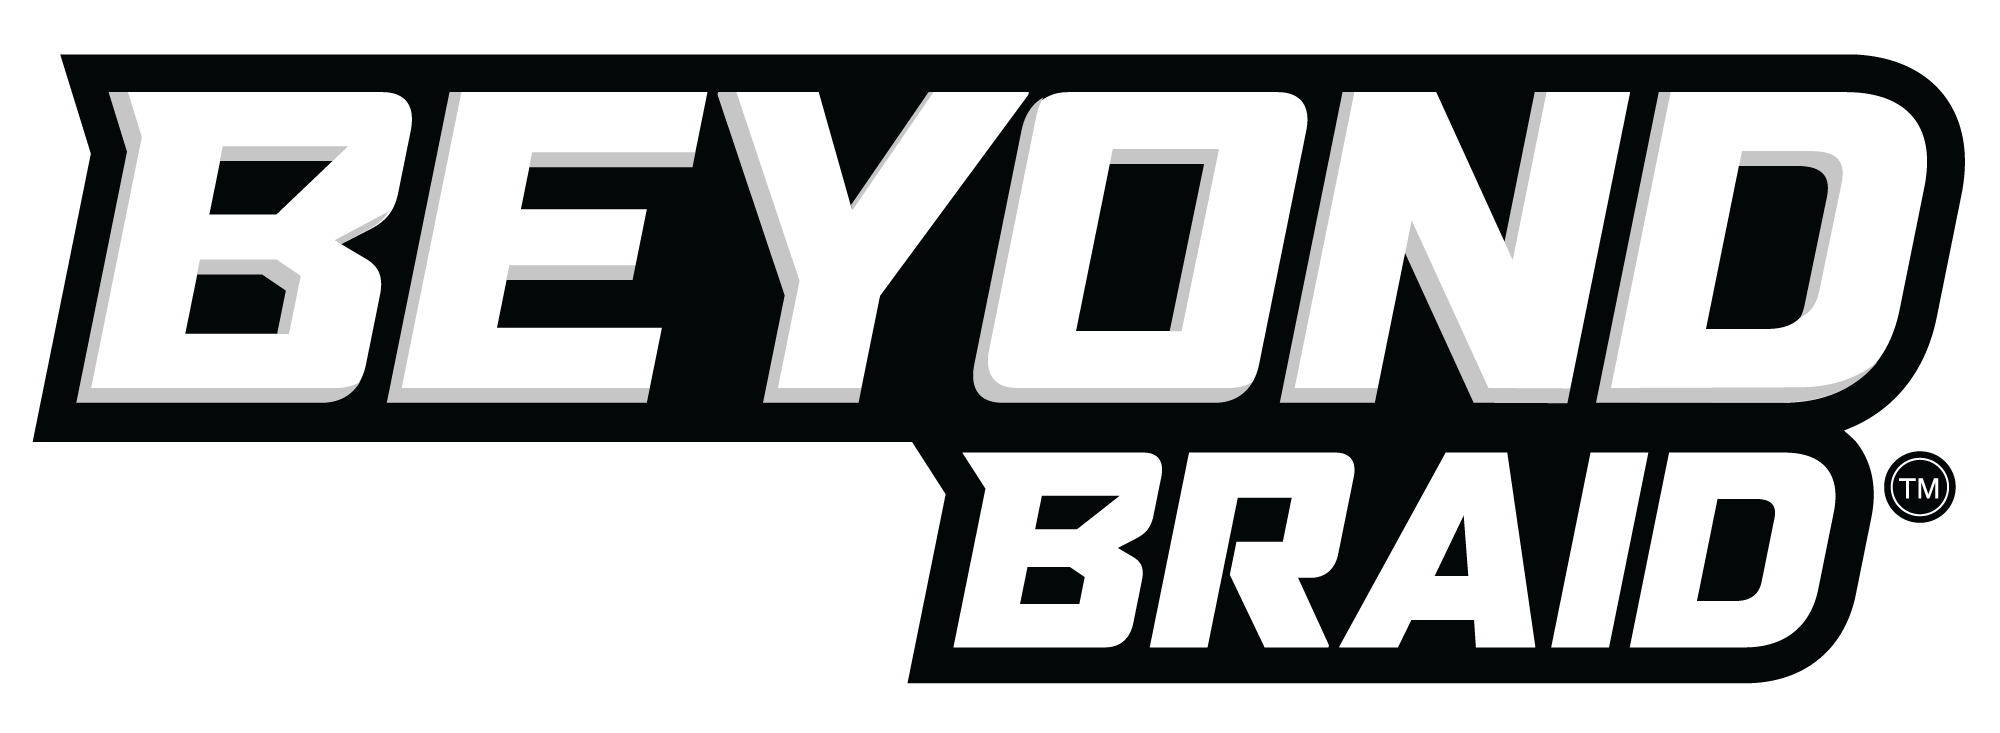 Blackout 8X NO FADE BRAID - Ultra Performance 8 Strand - Beyond Braid